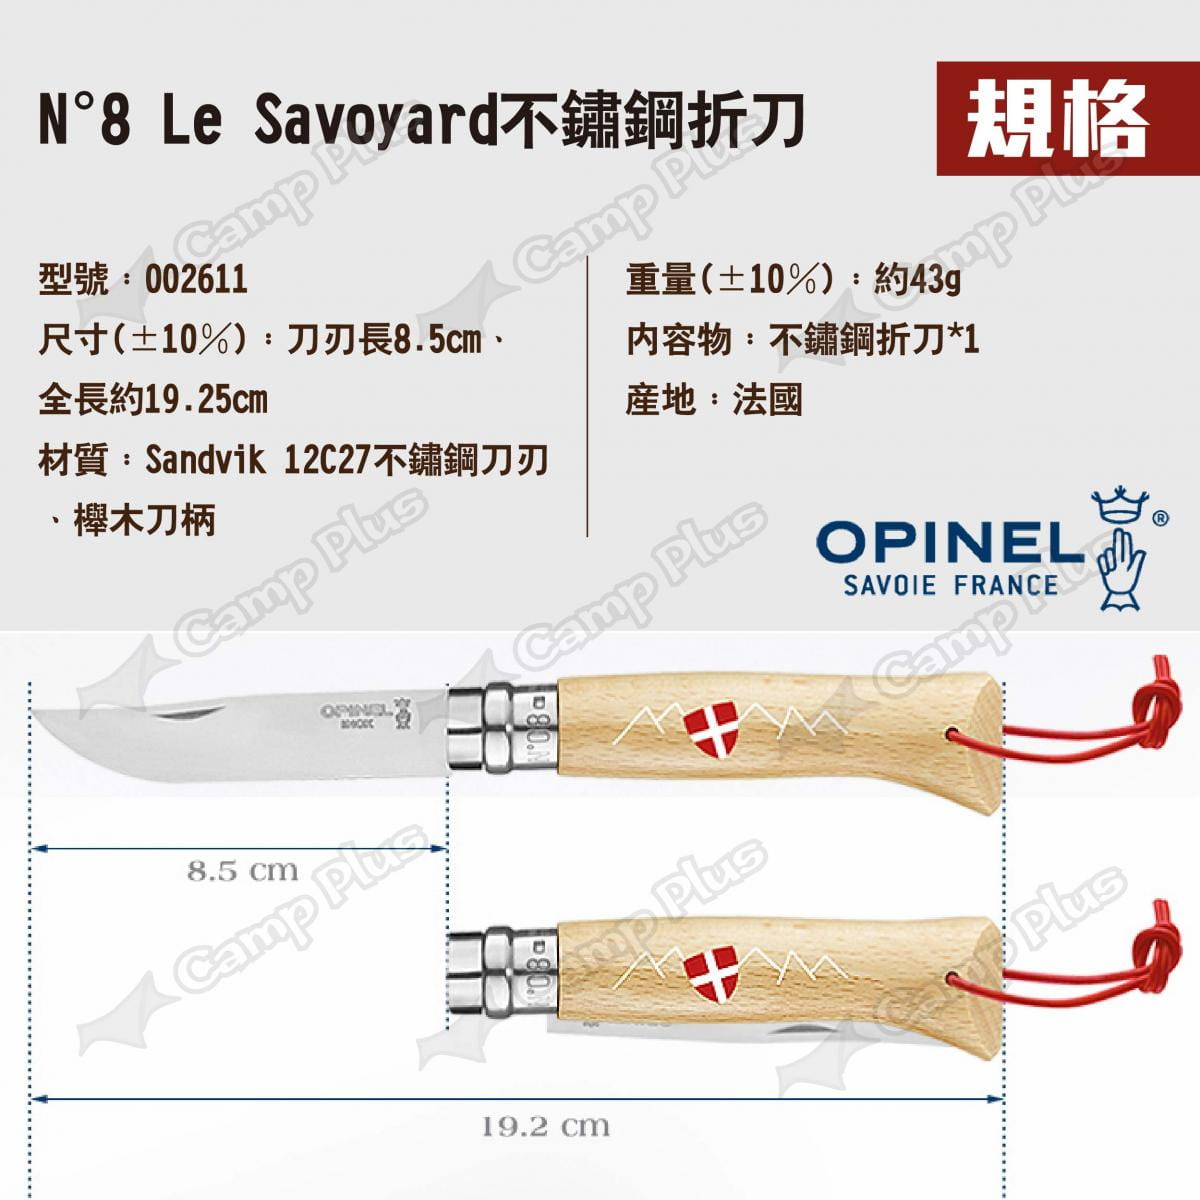 【OPINEL】N°8 Le Savoyard不鏽鋼折刀 002611 悠遊戶外 7